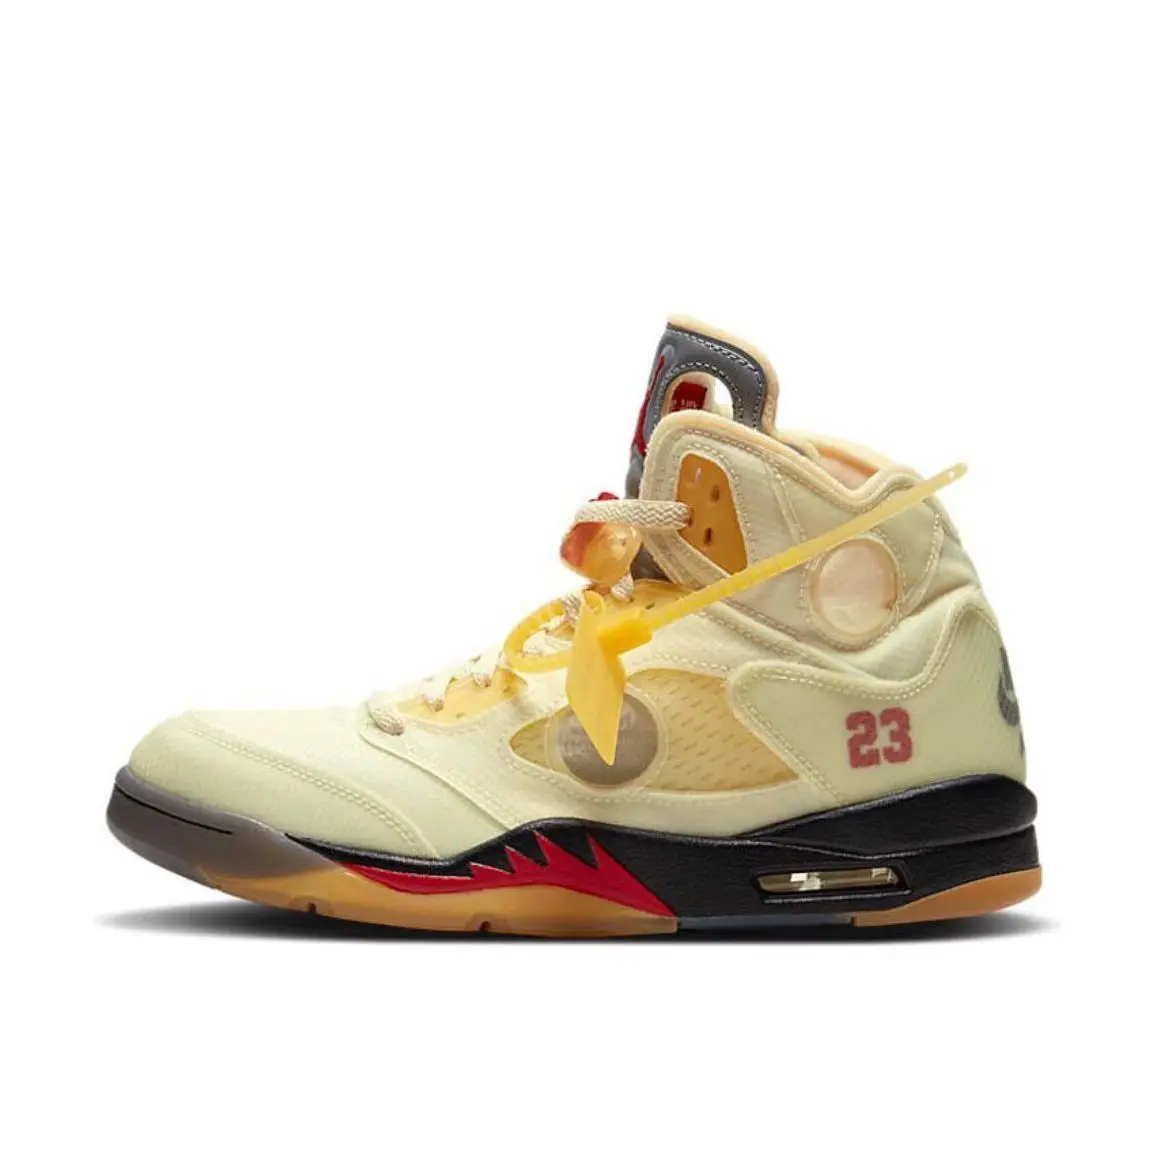 

Air Jordan5 off Mens Basketball Shoes Alternate Grape Michigan Inspire Camo White Cement Nike sport trainers shoes